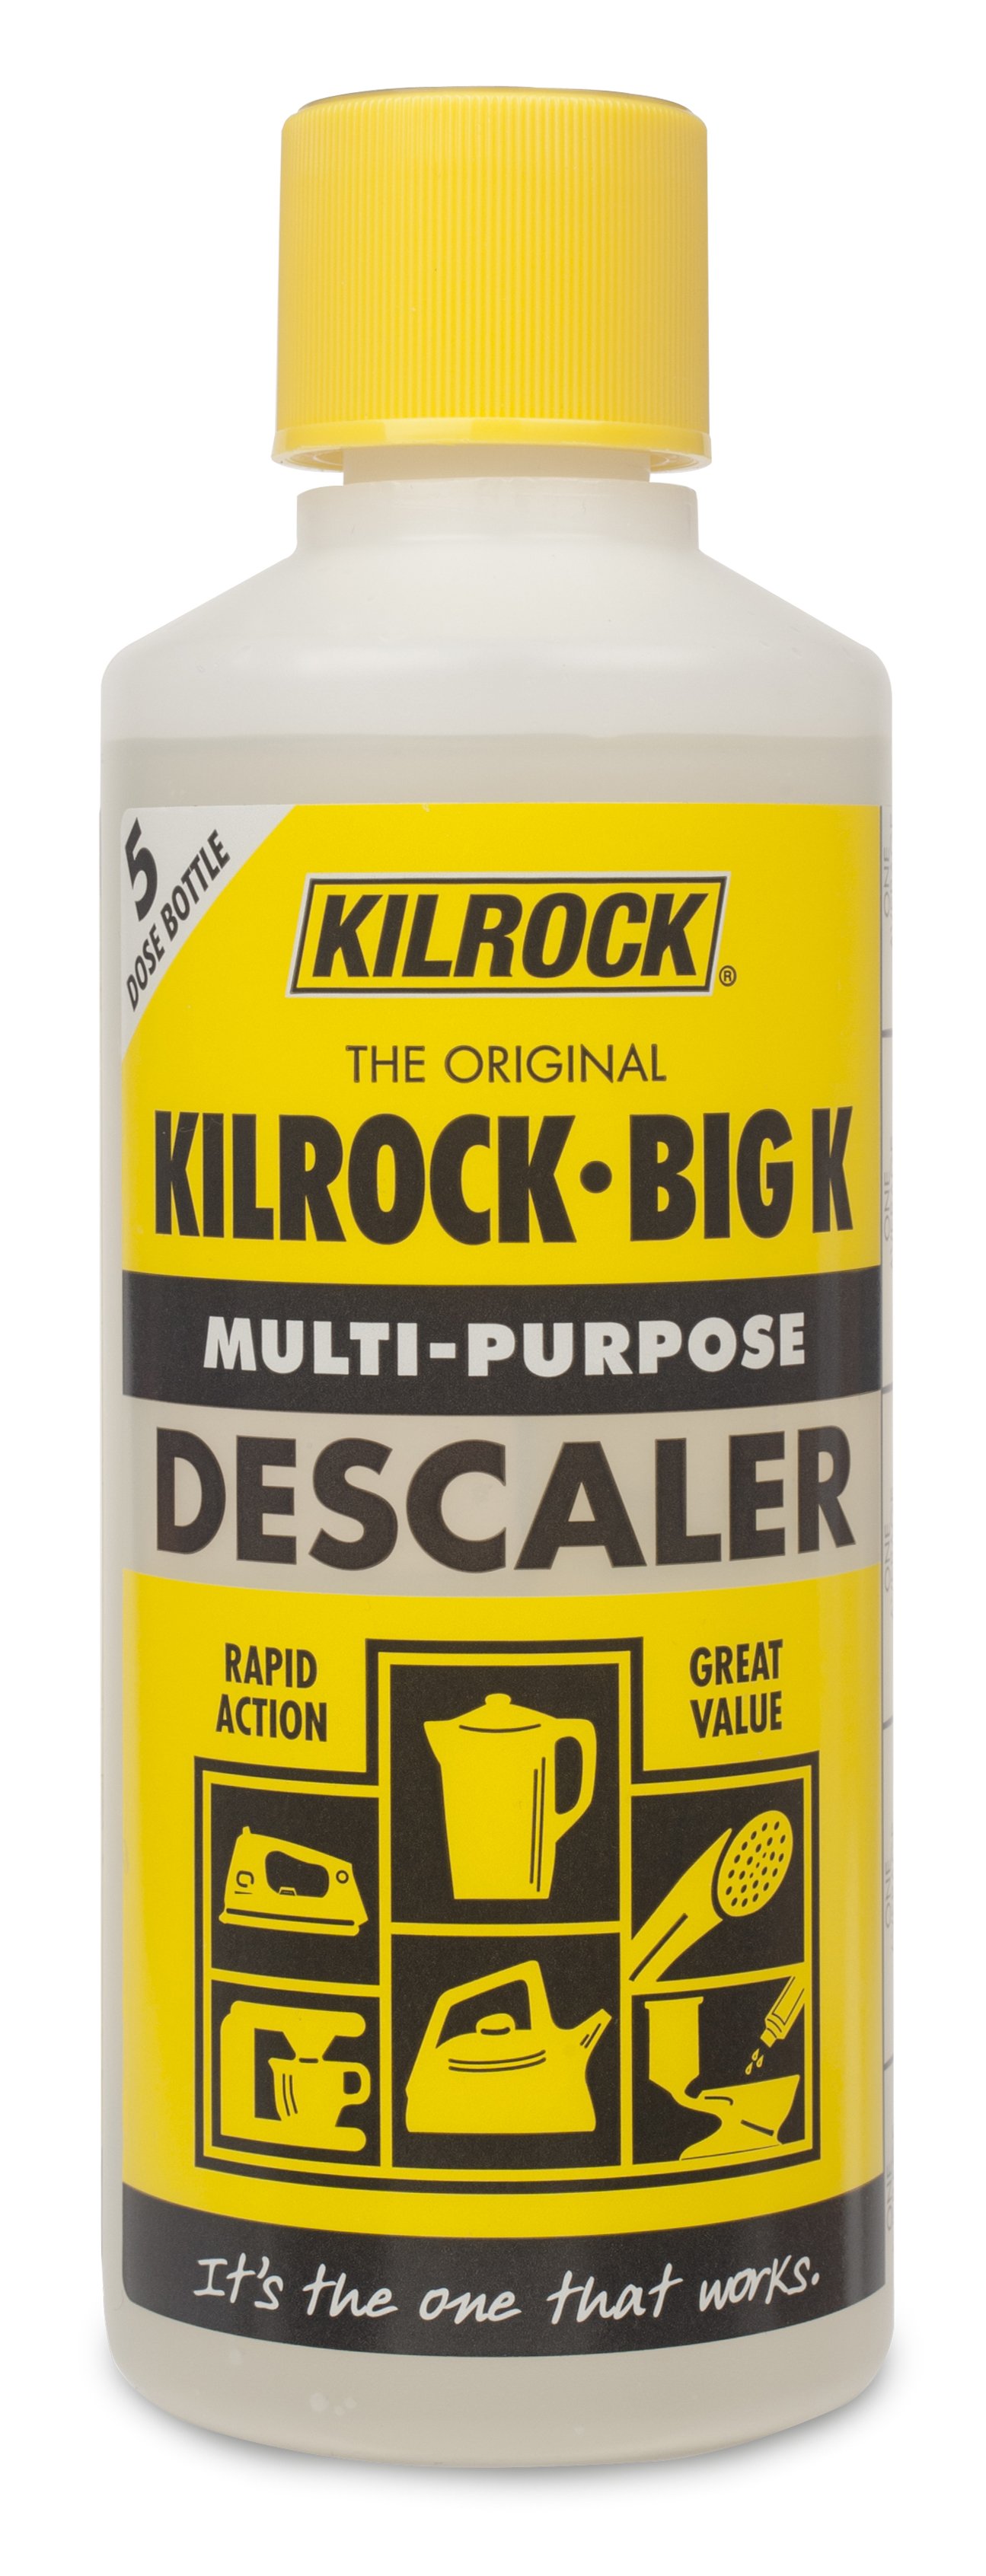 Kilrock Big K